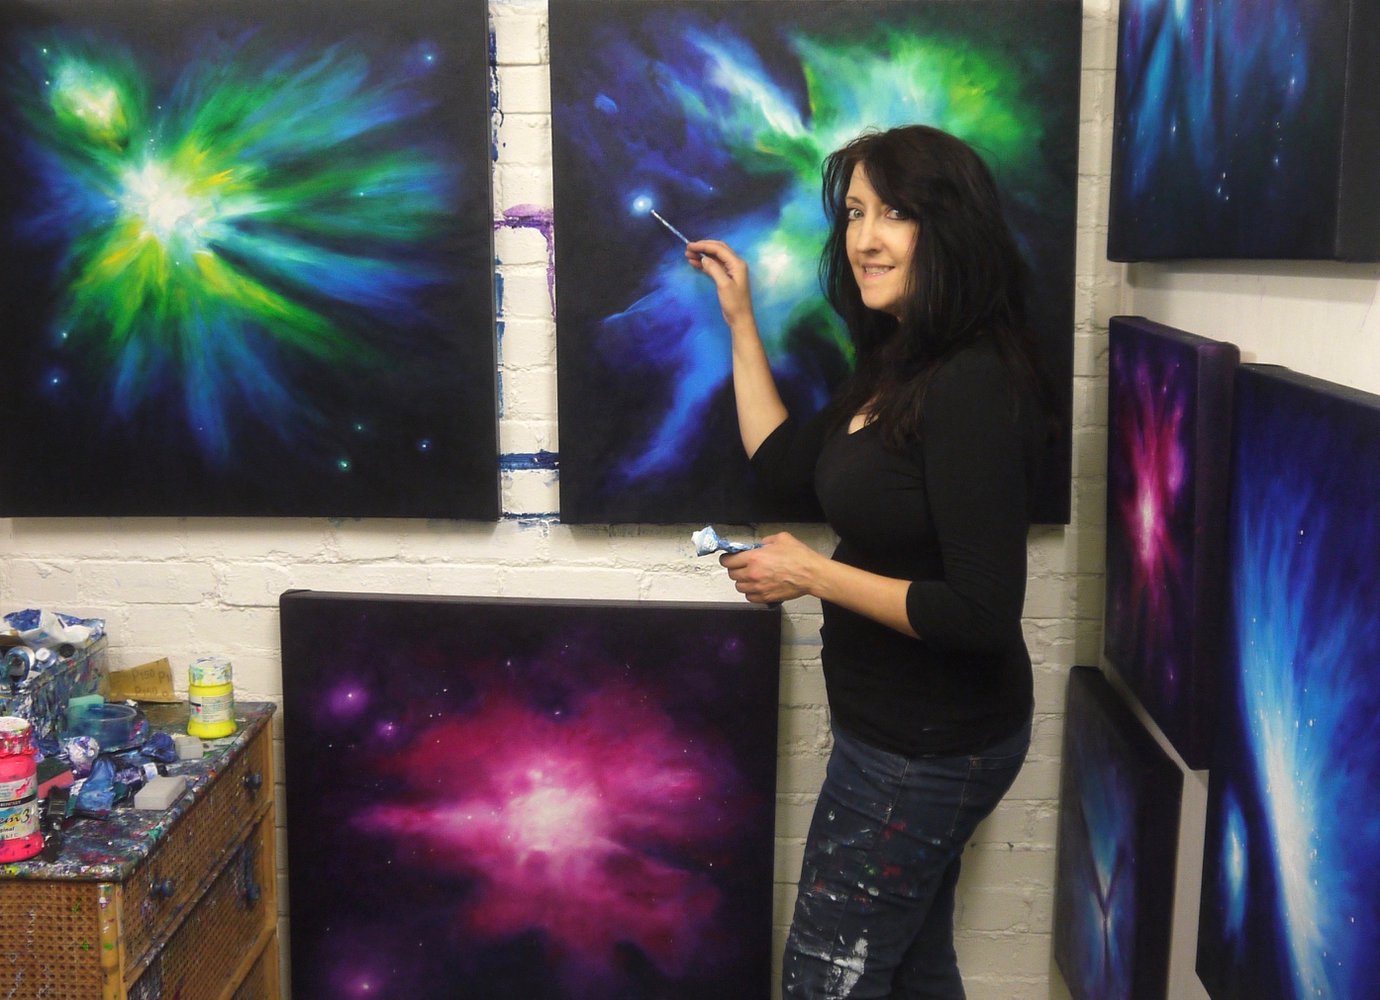 Julia Everett - Latest from Artist Studio | Artfinder